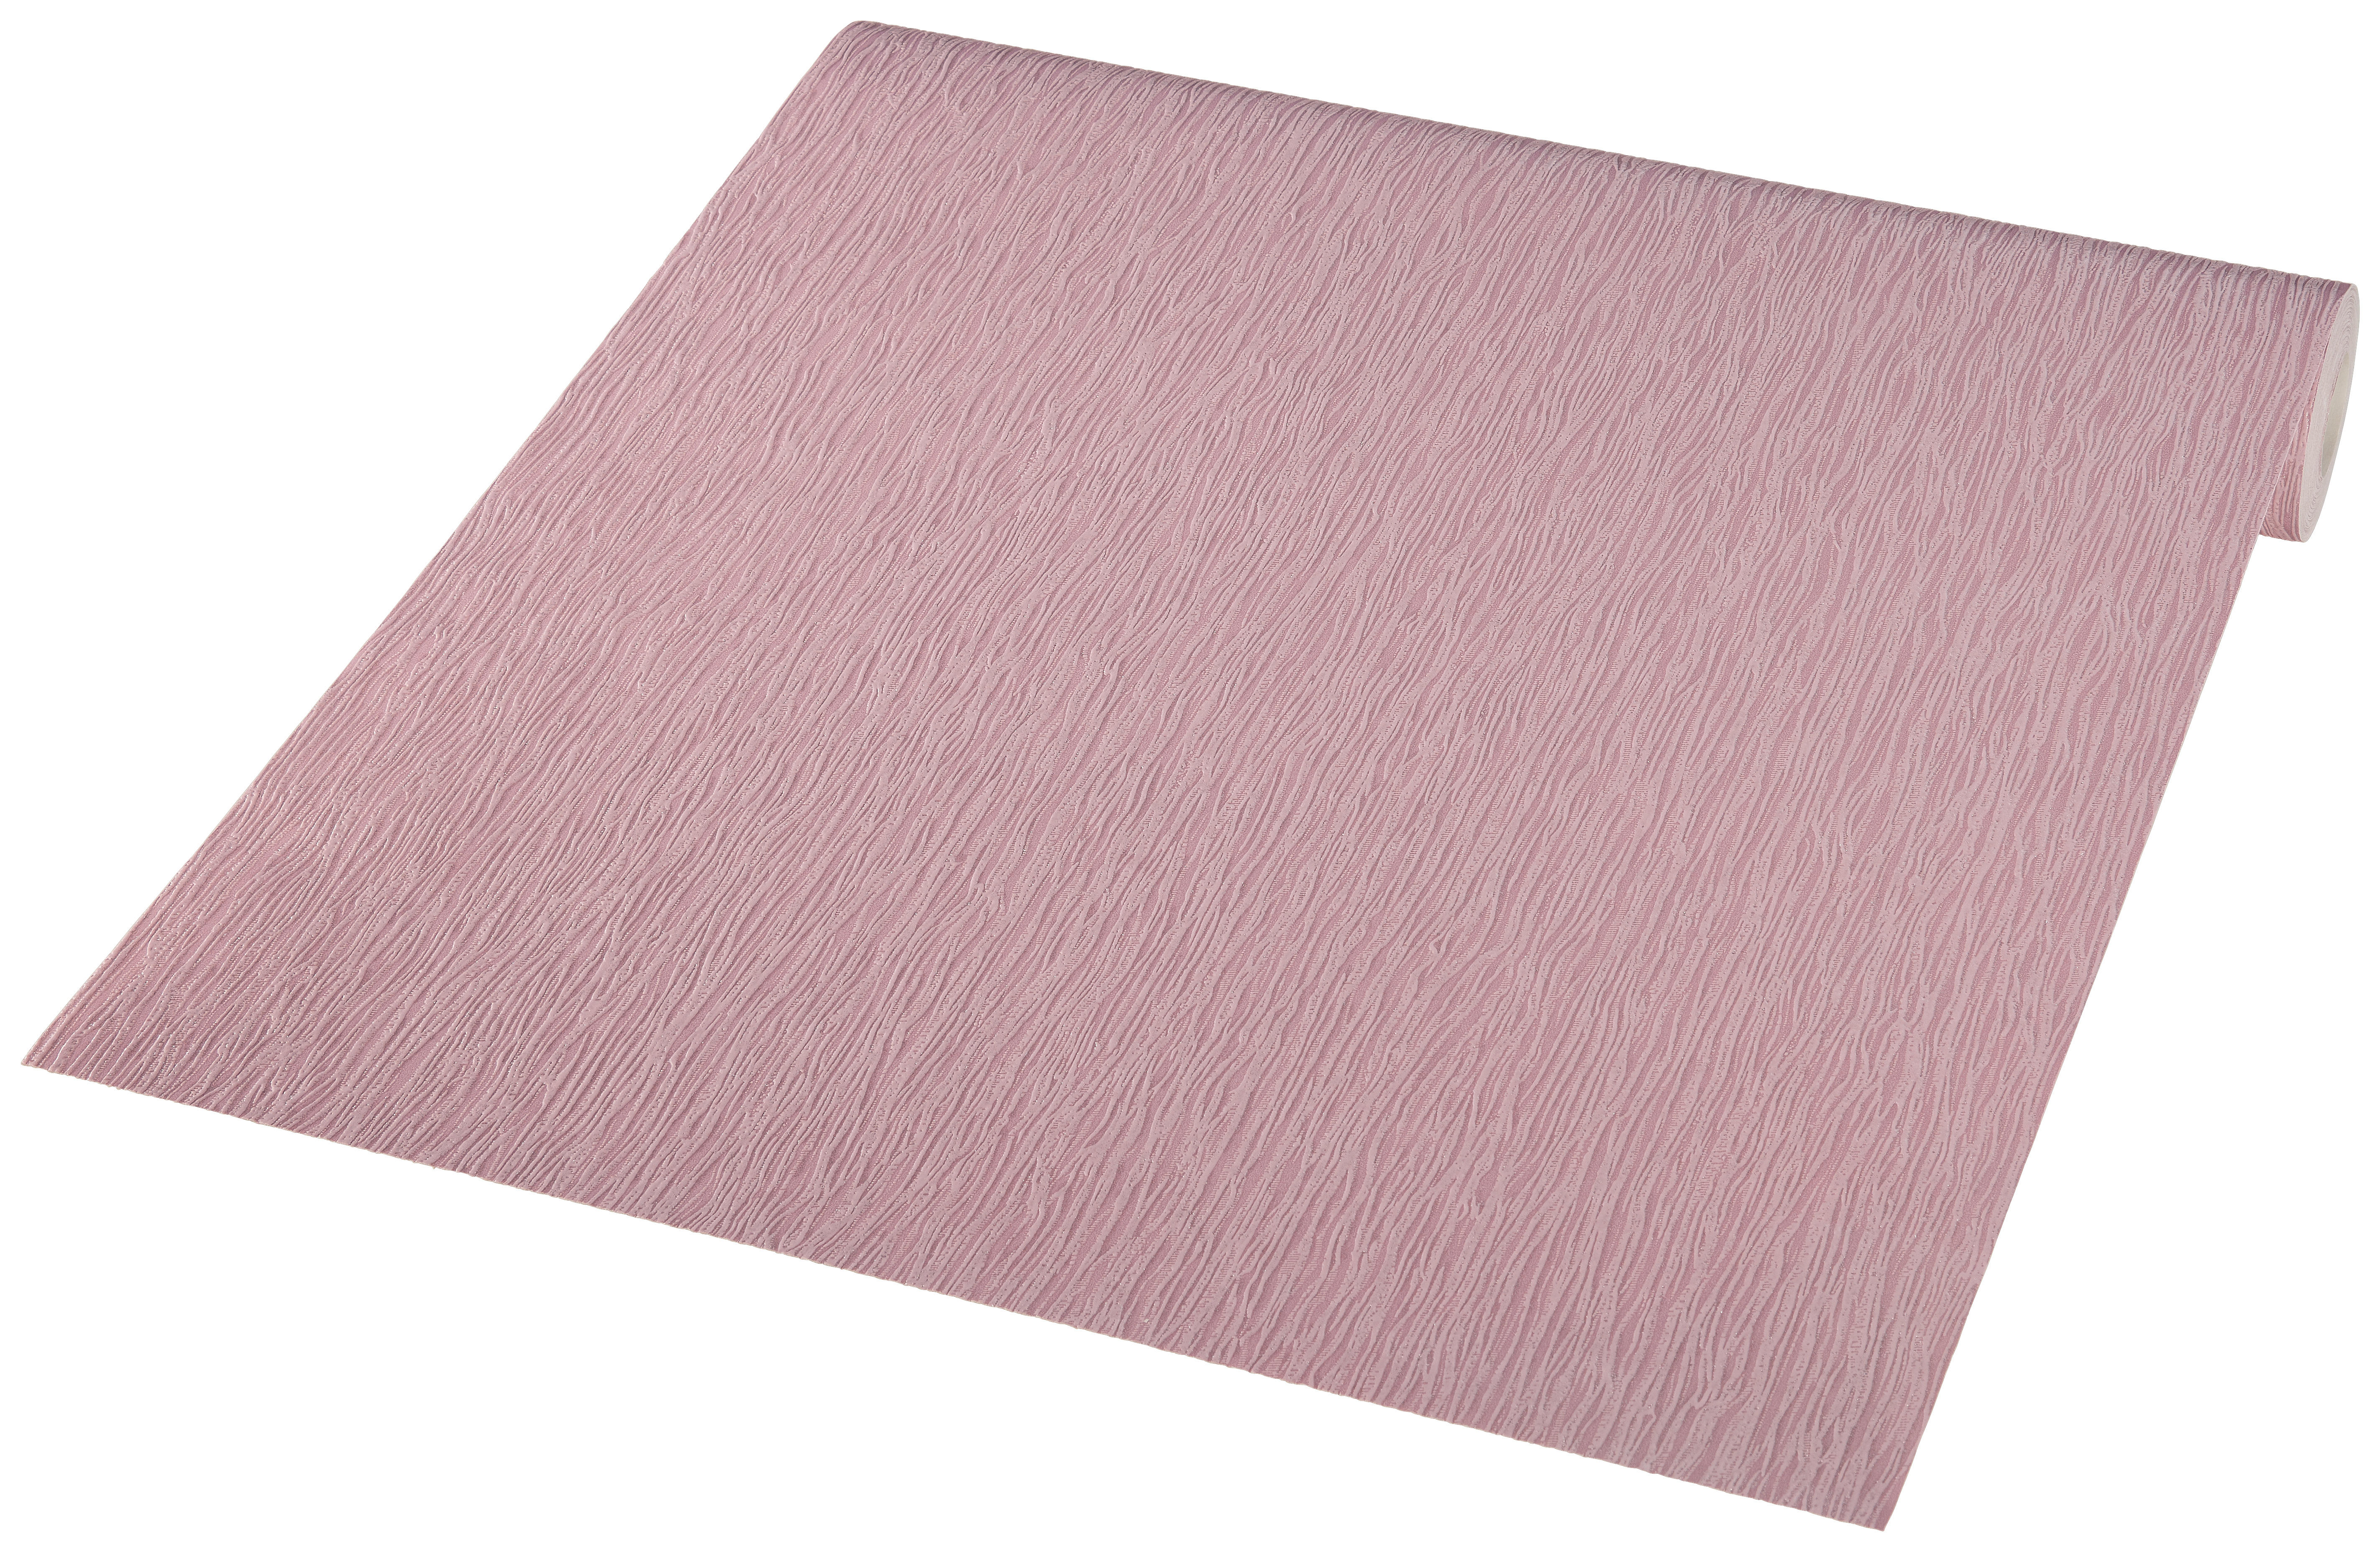 Vliestapete Struktur rosa B/L: ca. 53x1005 cm Vliestapete_13240-05 - rosa (53,00/1005,00cm)